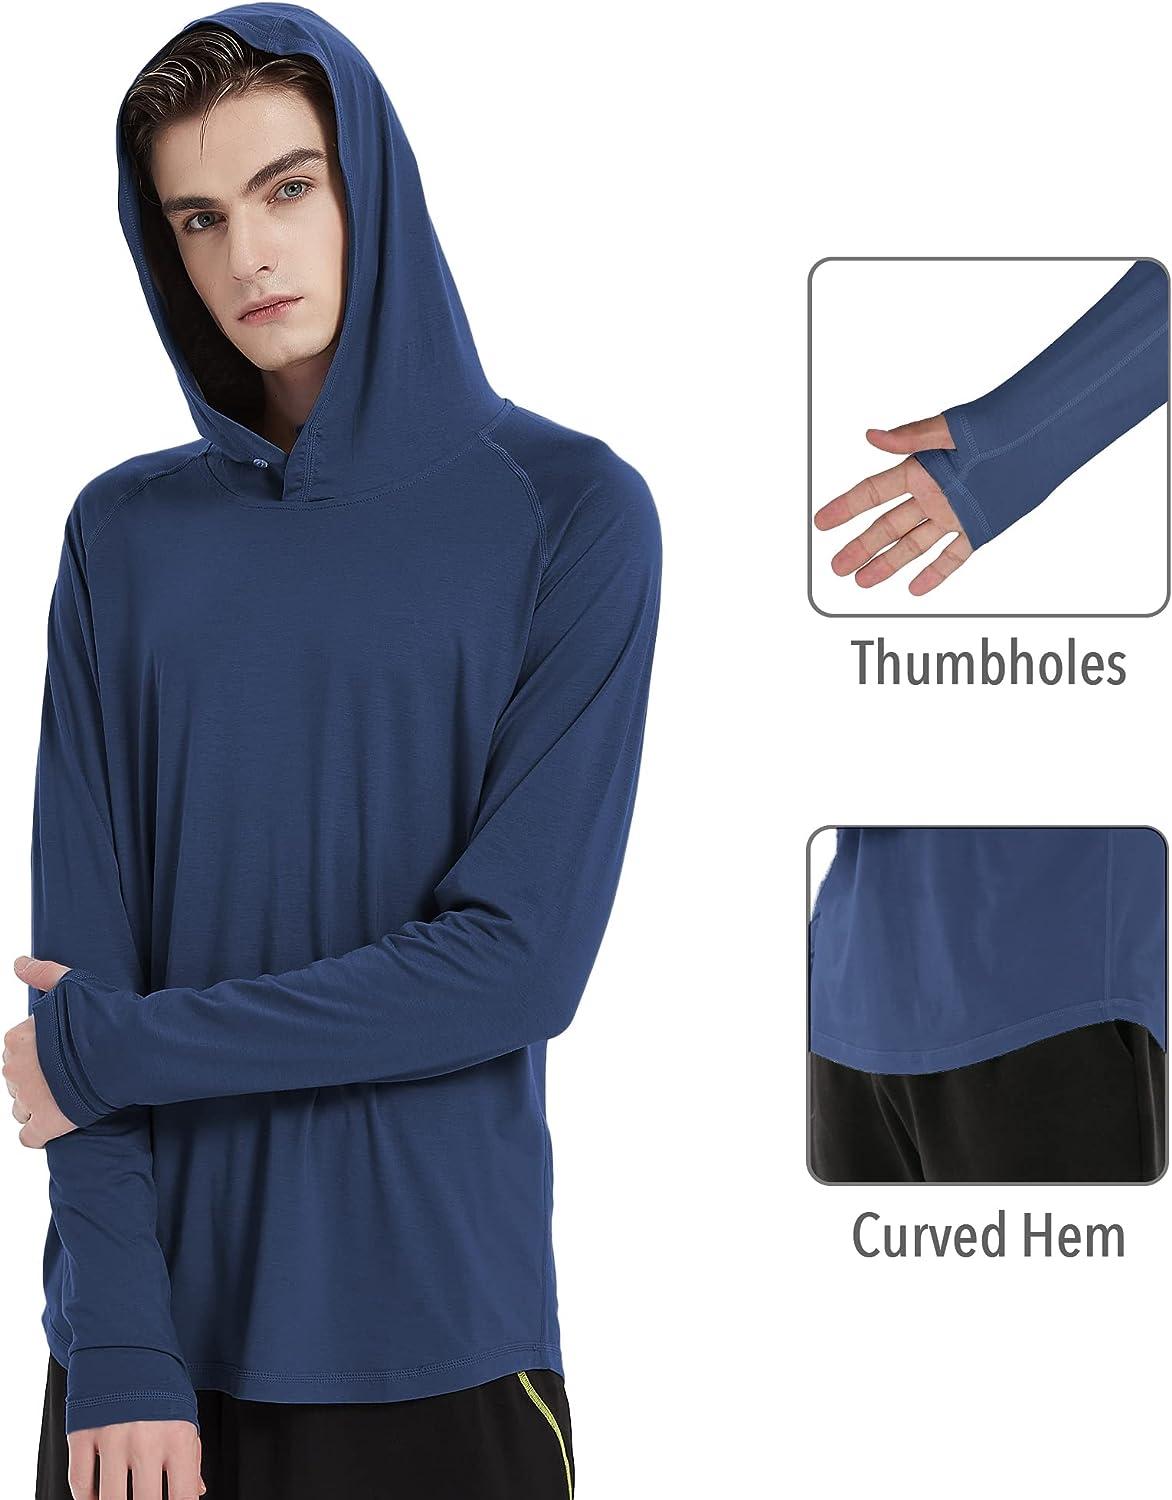 netdraw Men's Ultra-Soft Bamboo Hoodie Shirt UPF 50+ Sun Protection Long  Sleeve Lightweight SPF Fishing Hiking UV Shirt Large Pacific Blue